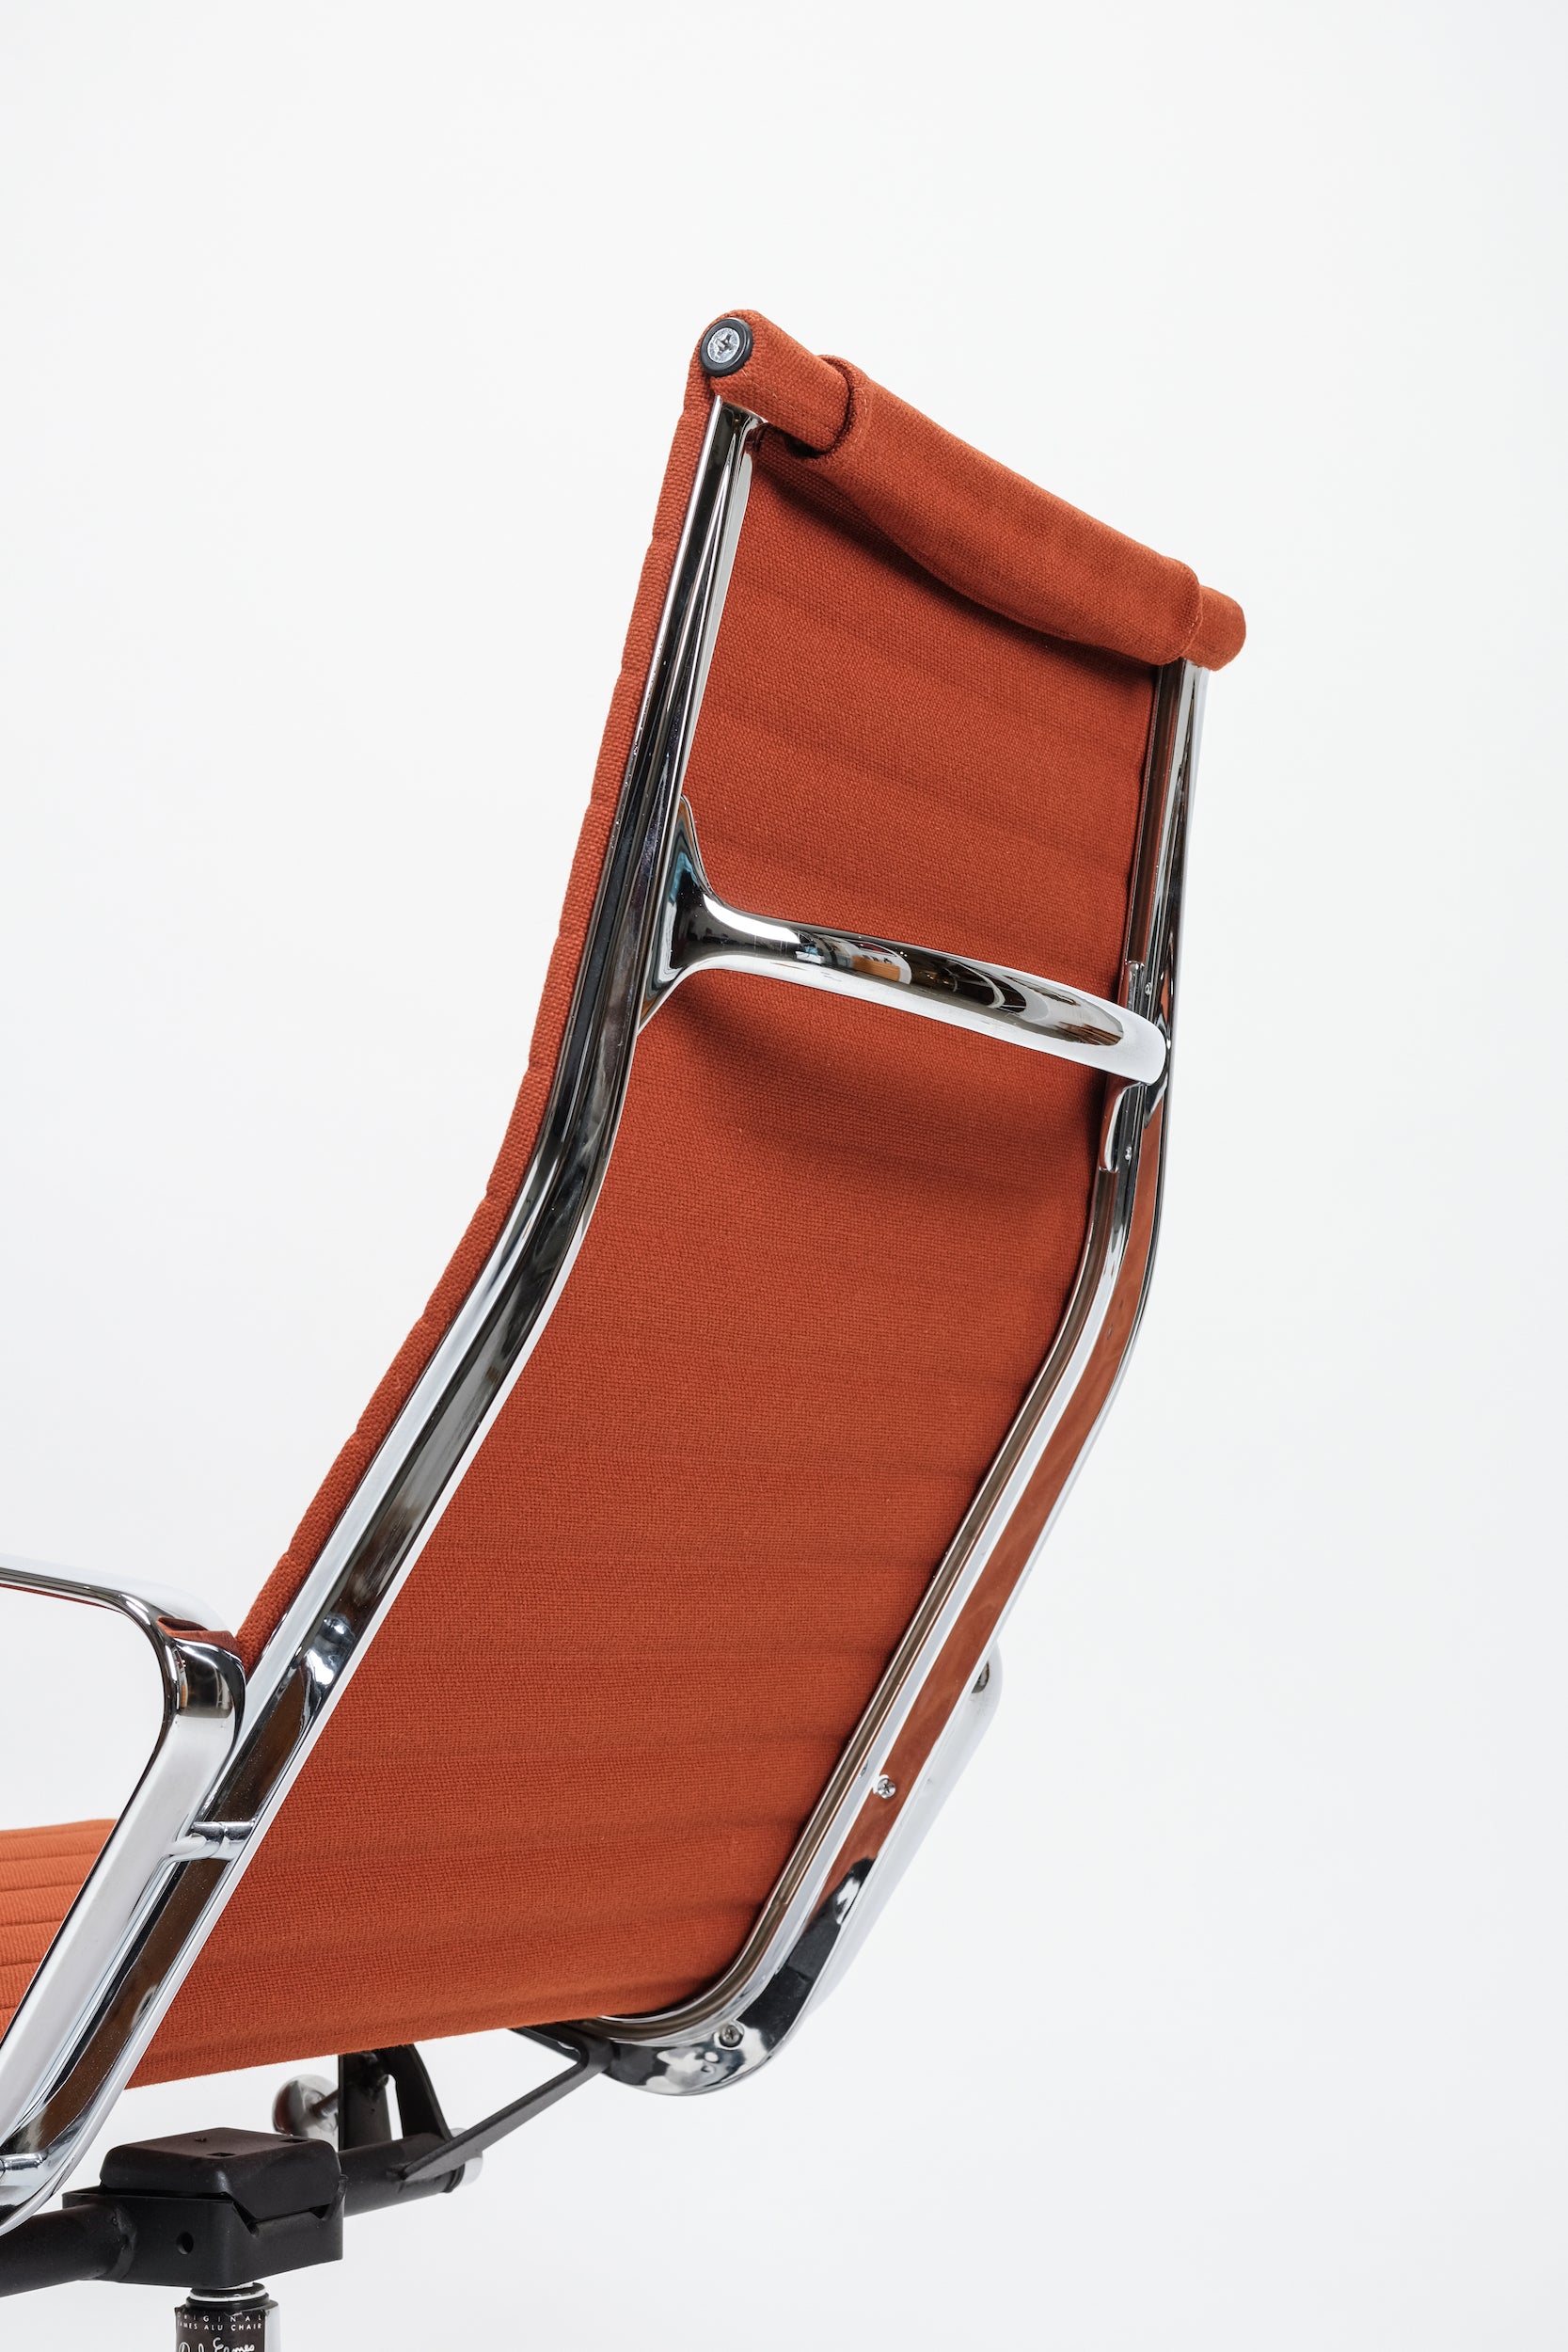 Eames EA 124 Aluminium Chair, Vitra